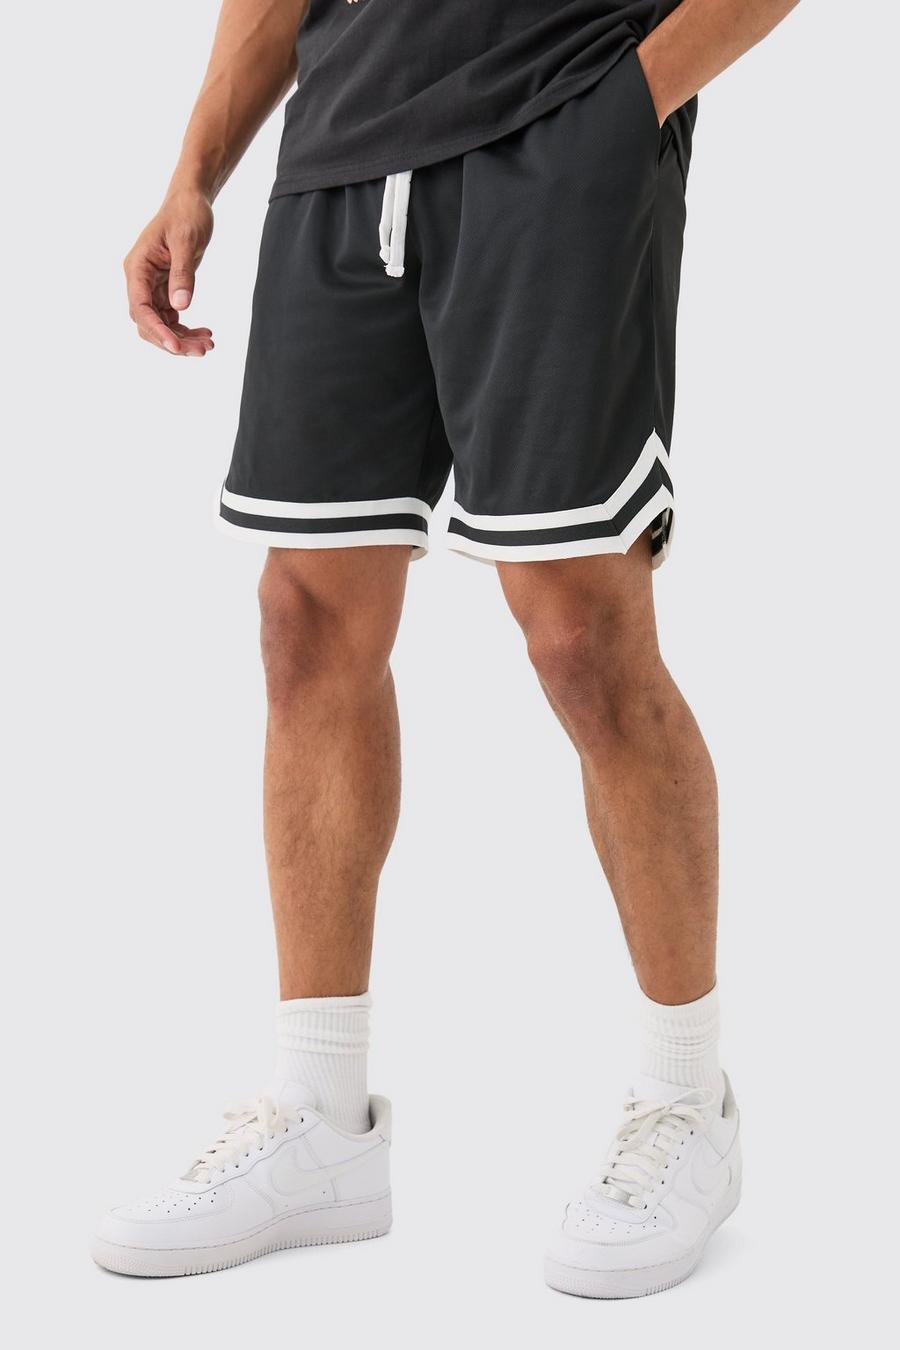 Pantalón corto de malla estilo baloncesto de largo medio, Black